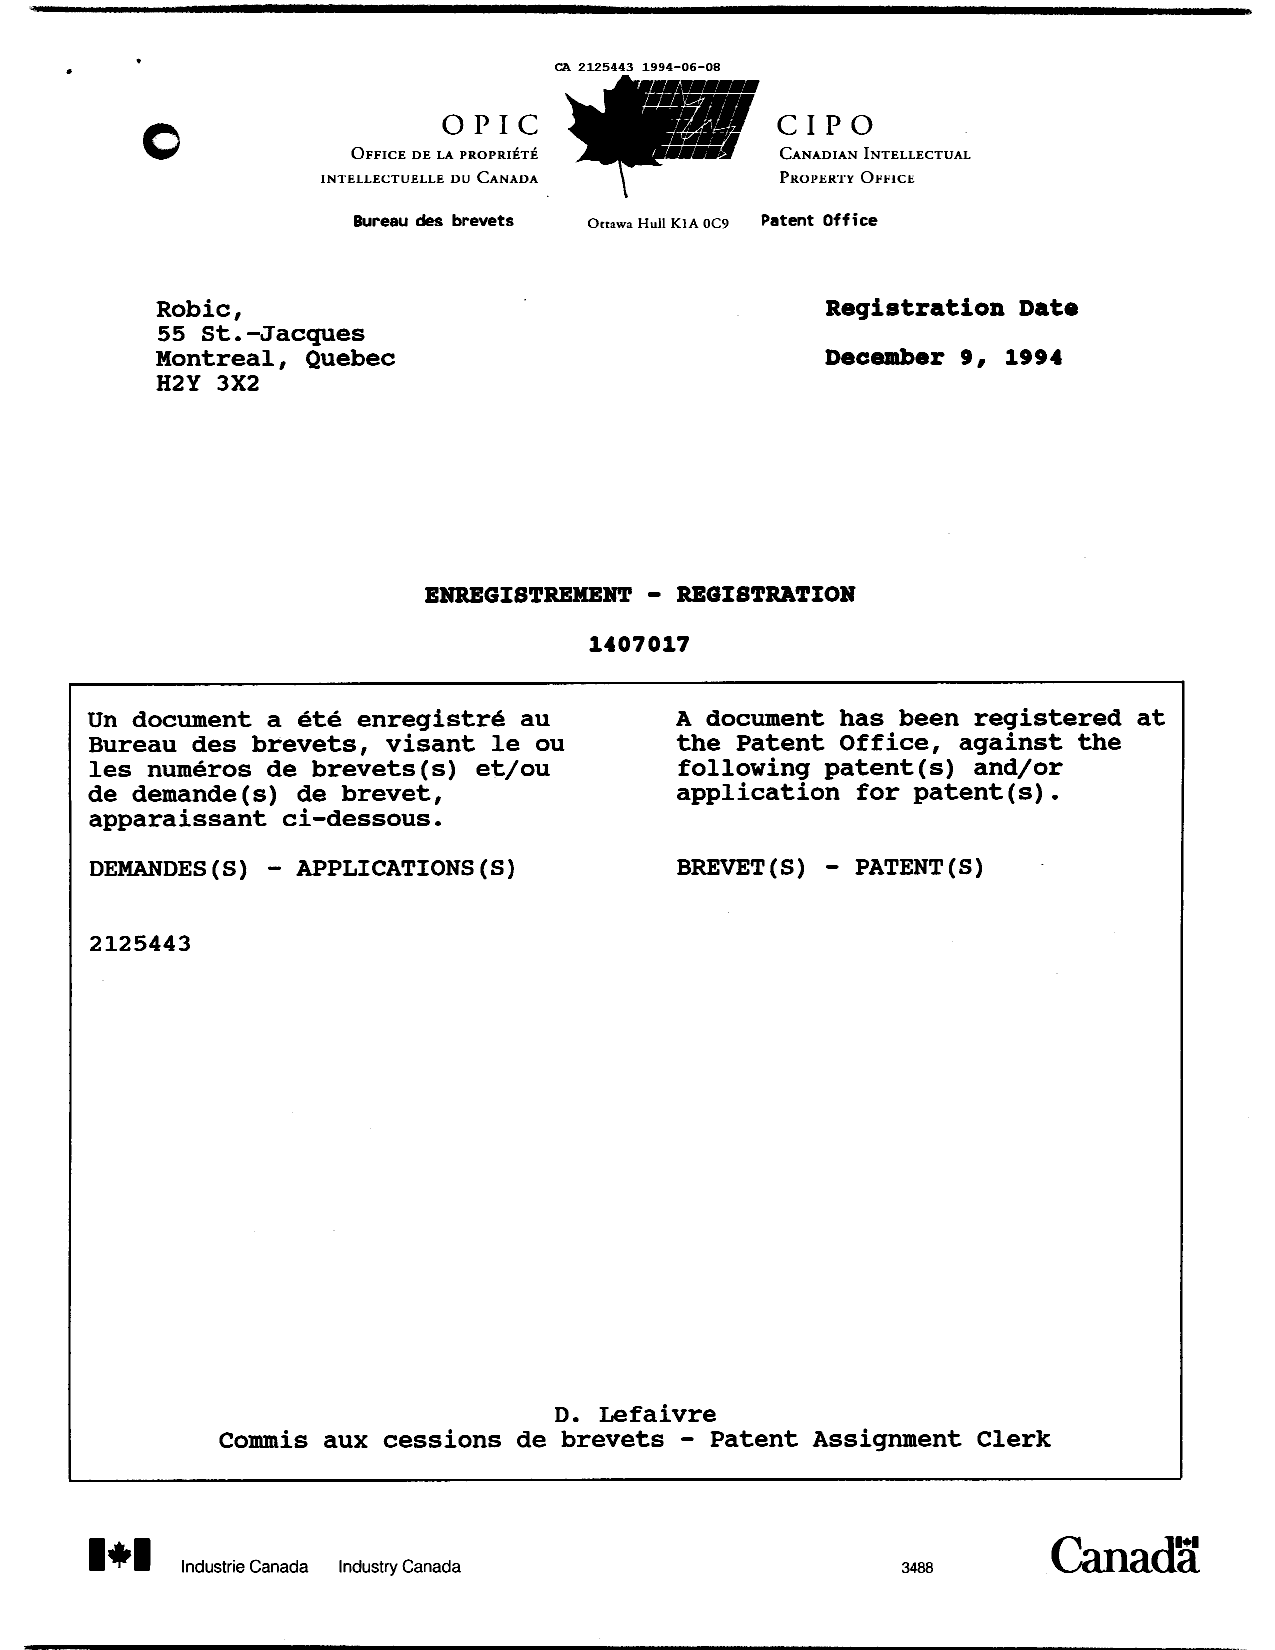 Canadian Patent Document 2125443. Prosecution Correspondence 19940608. Image 1 of 8